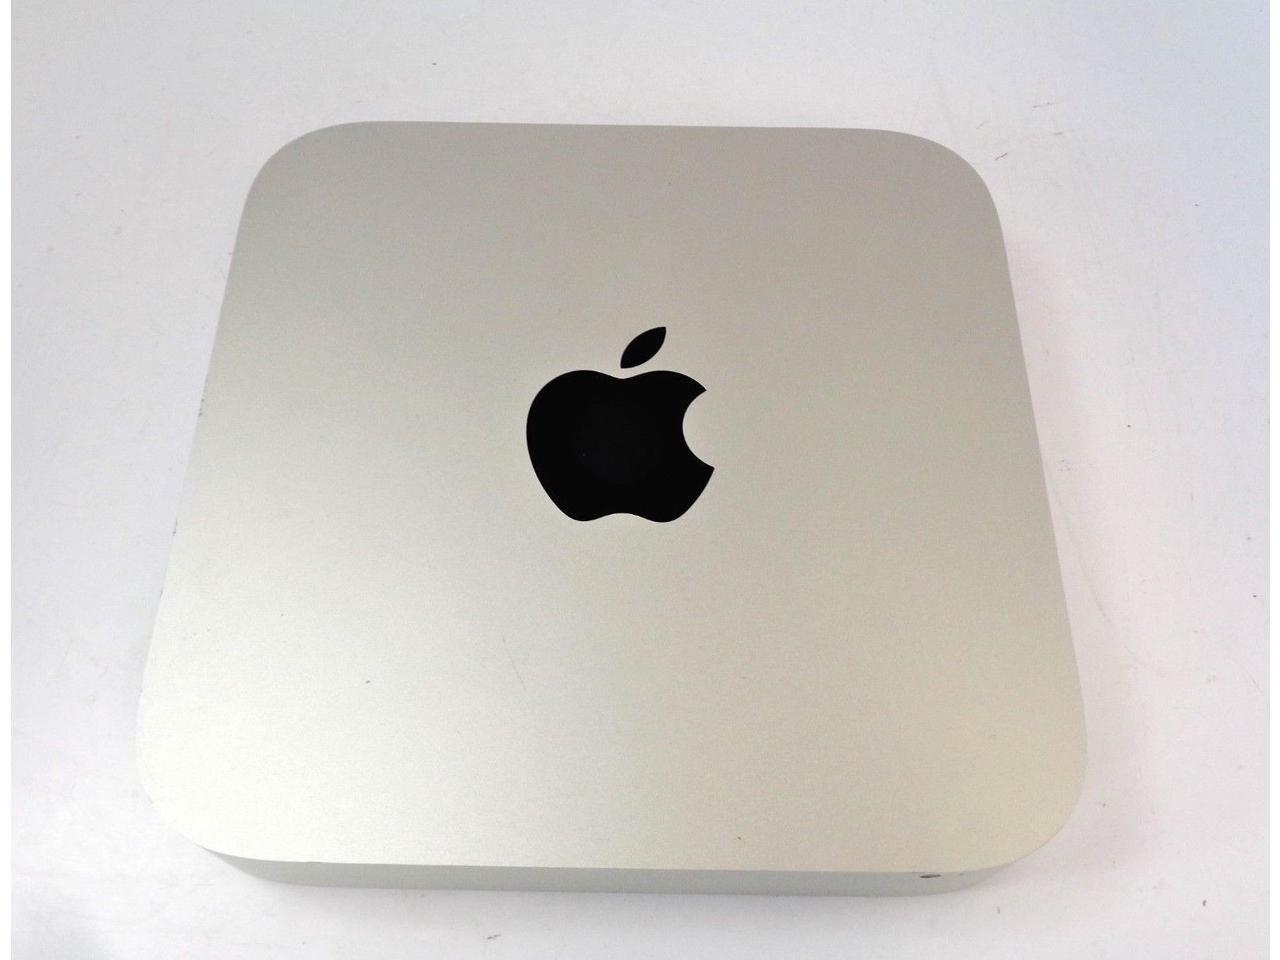 apple a1347 mac mini review